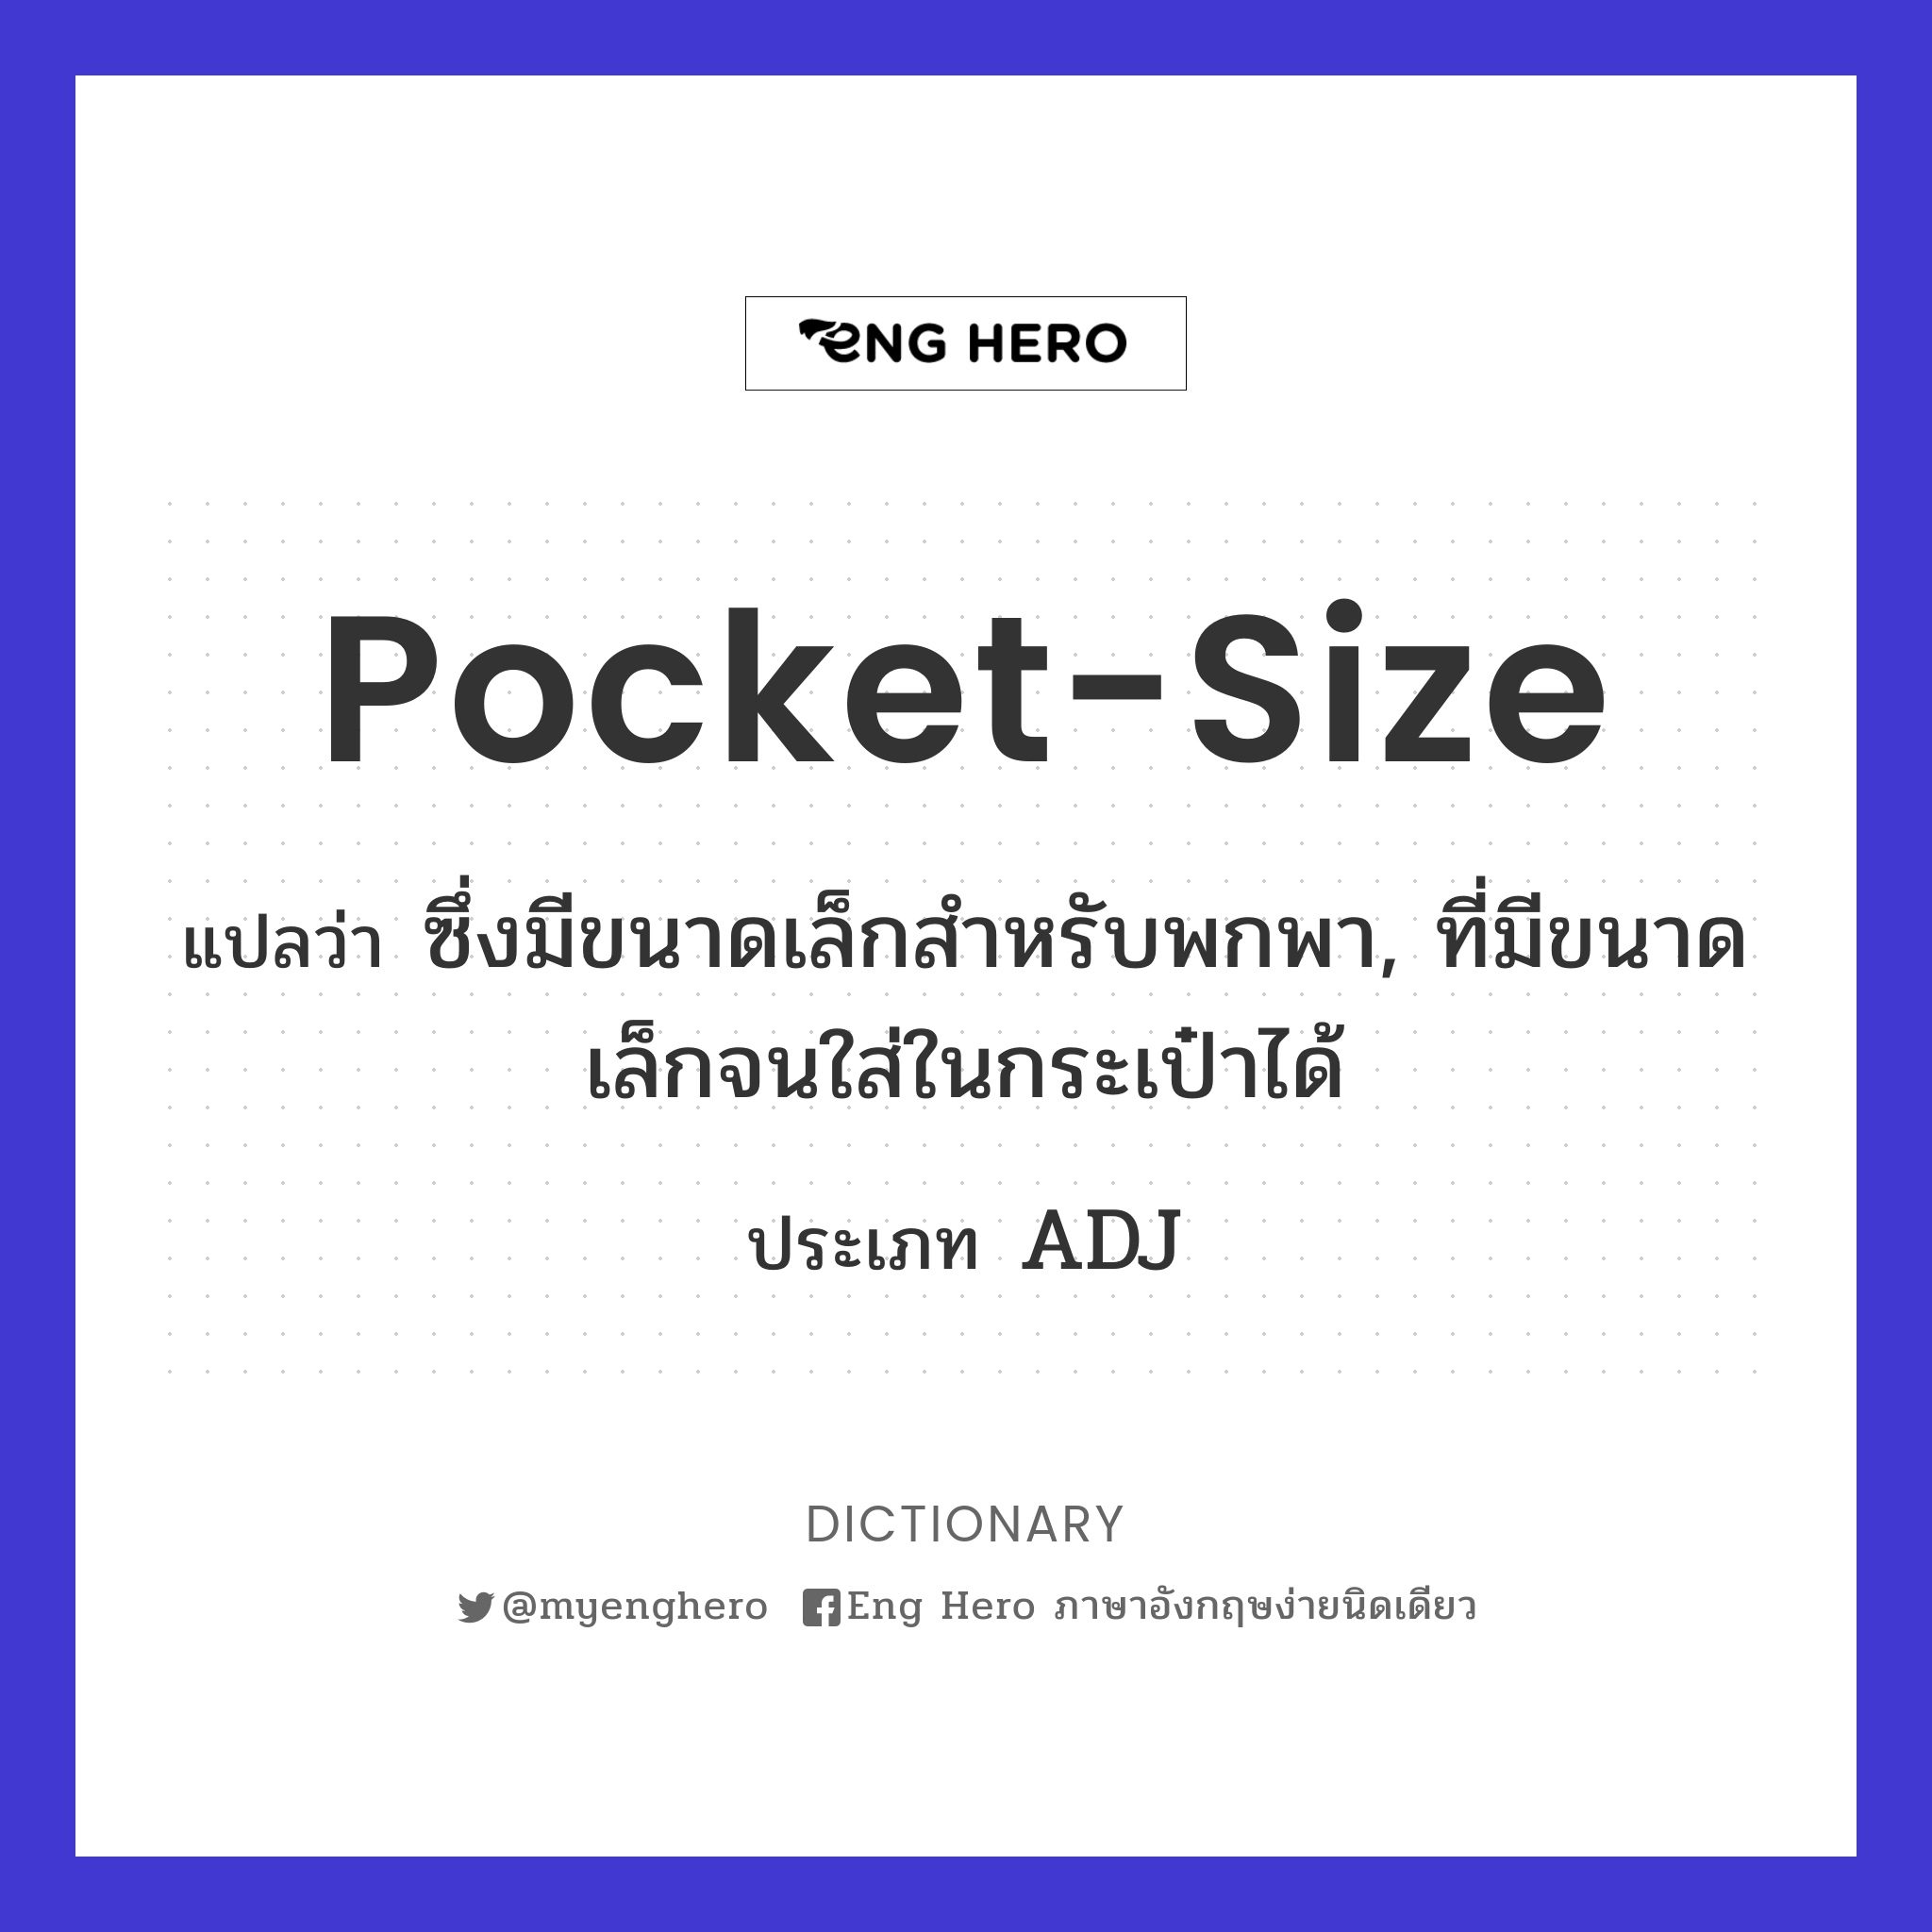 pocket-size